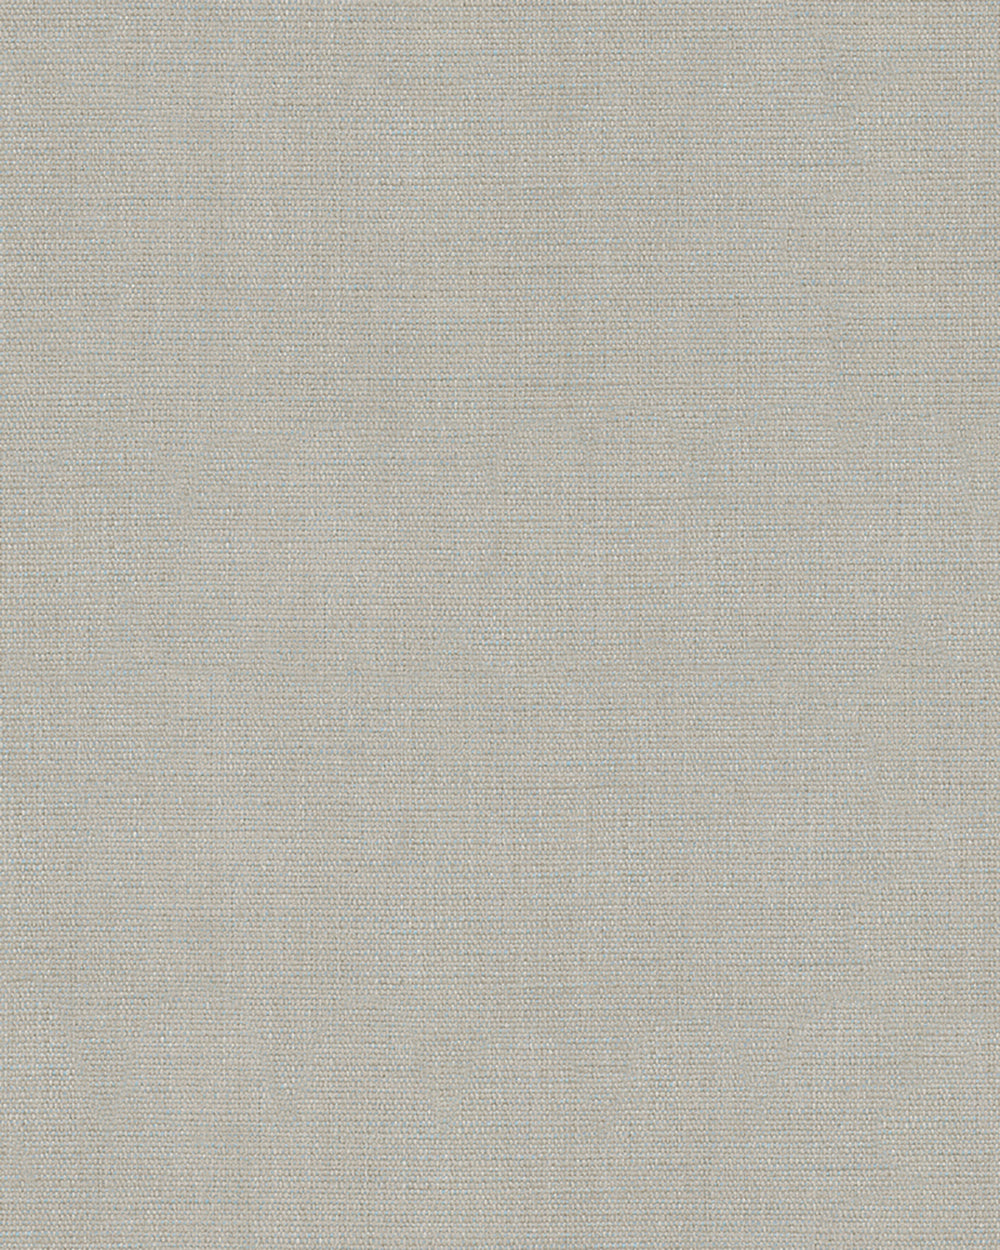 Avalon - Faux Grasscloth plain wallpaper Marburg Roll Light Taupe  31605